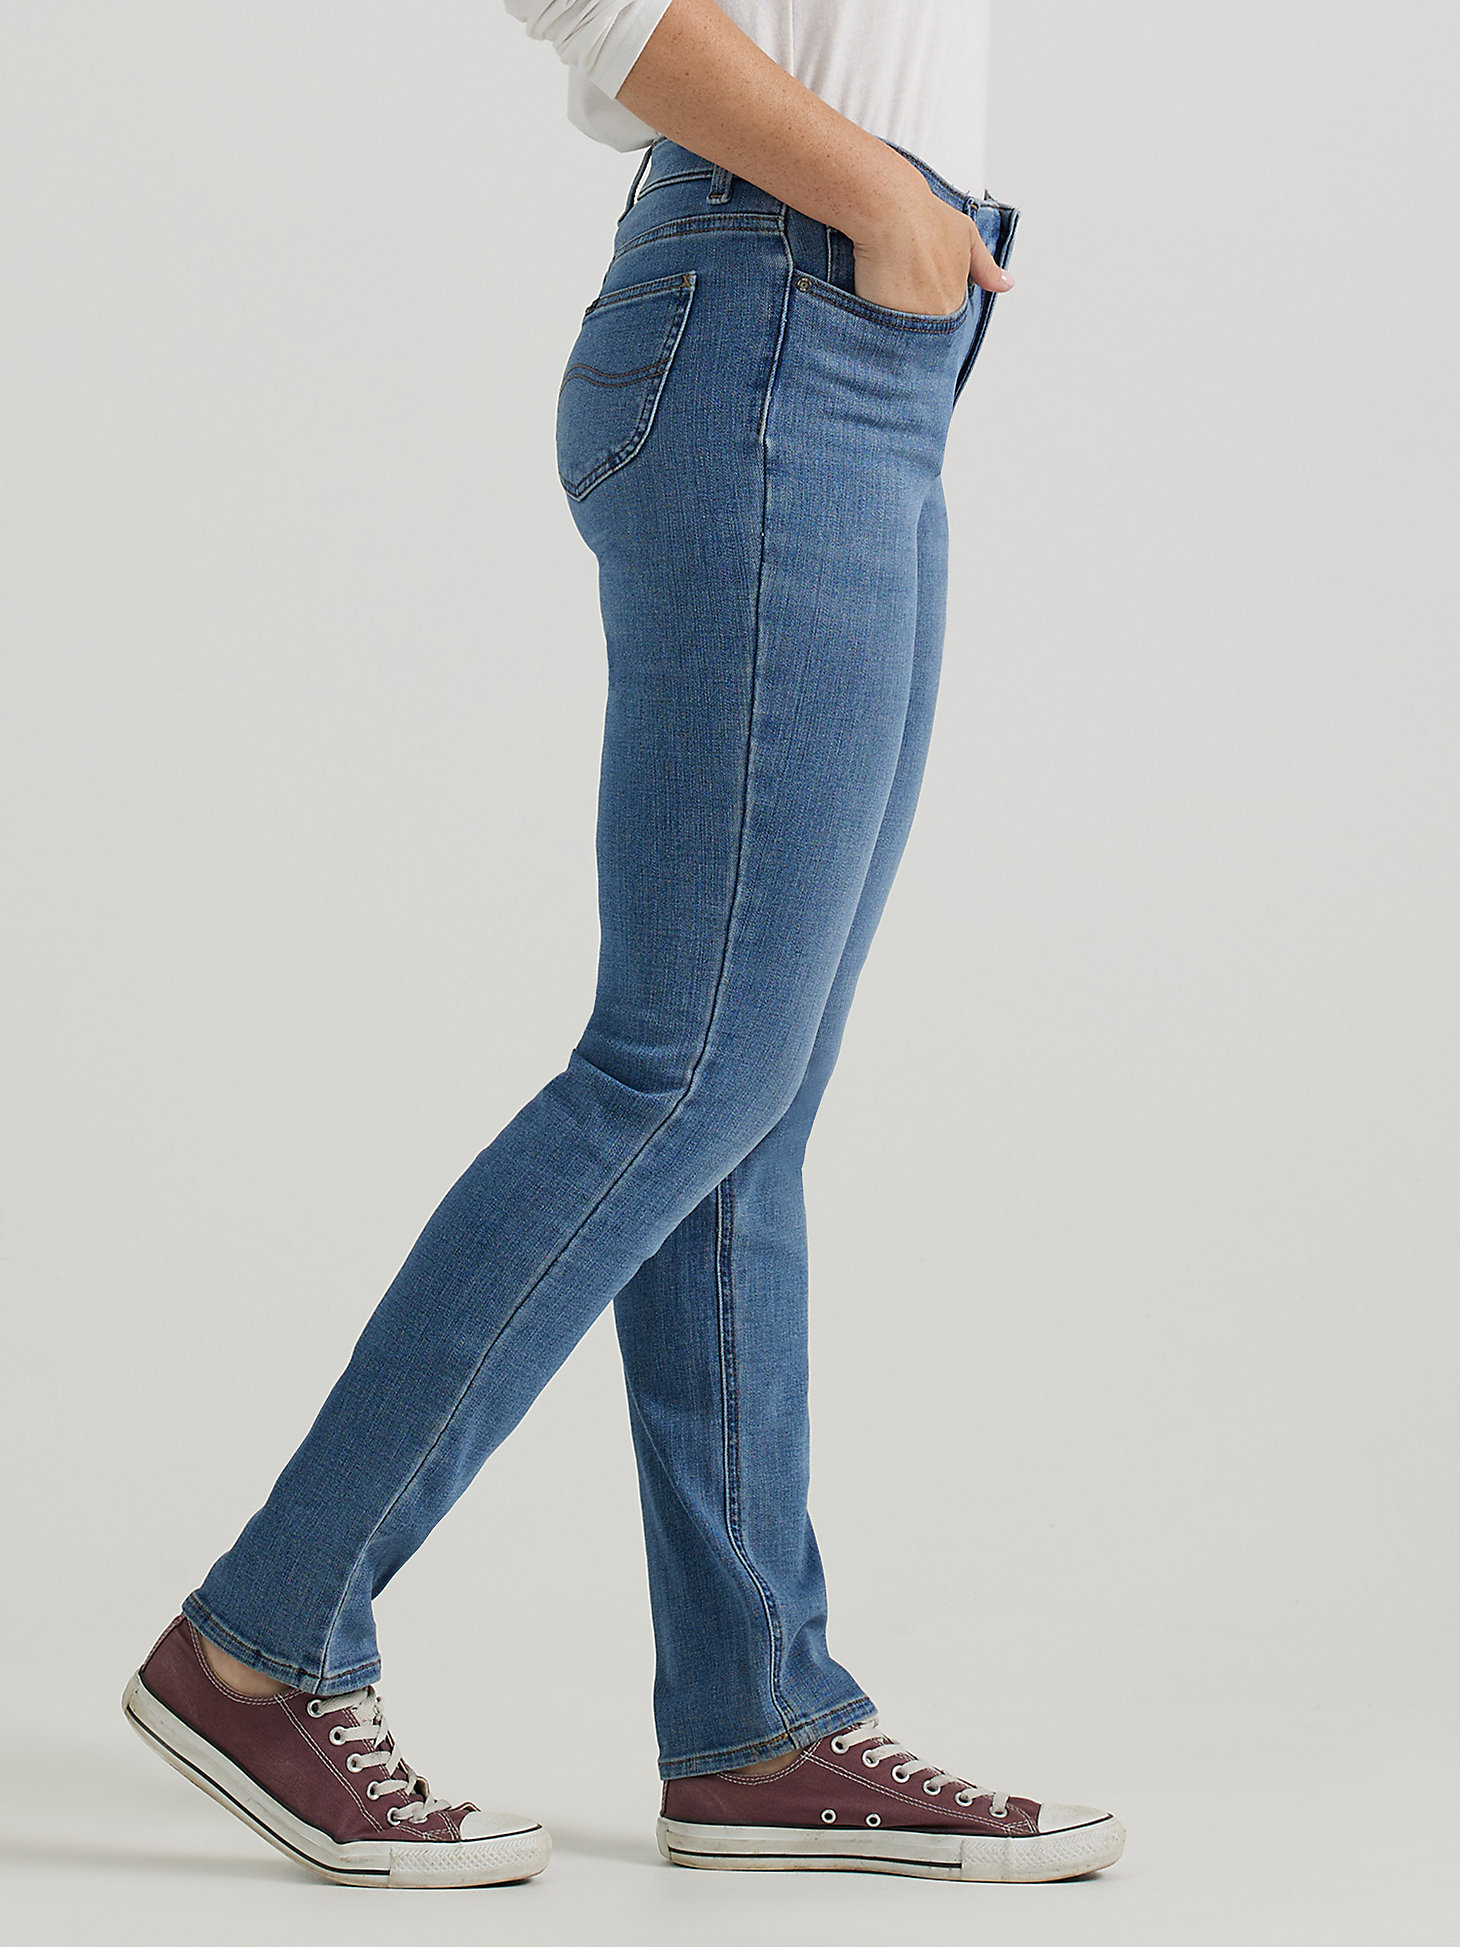 Women's Ultra Lux Comfort Slim Straight Jean in Junction alternative view 3